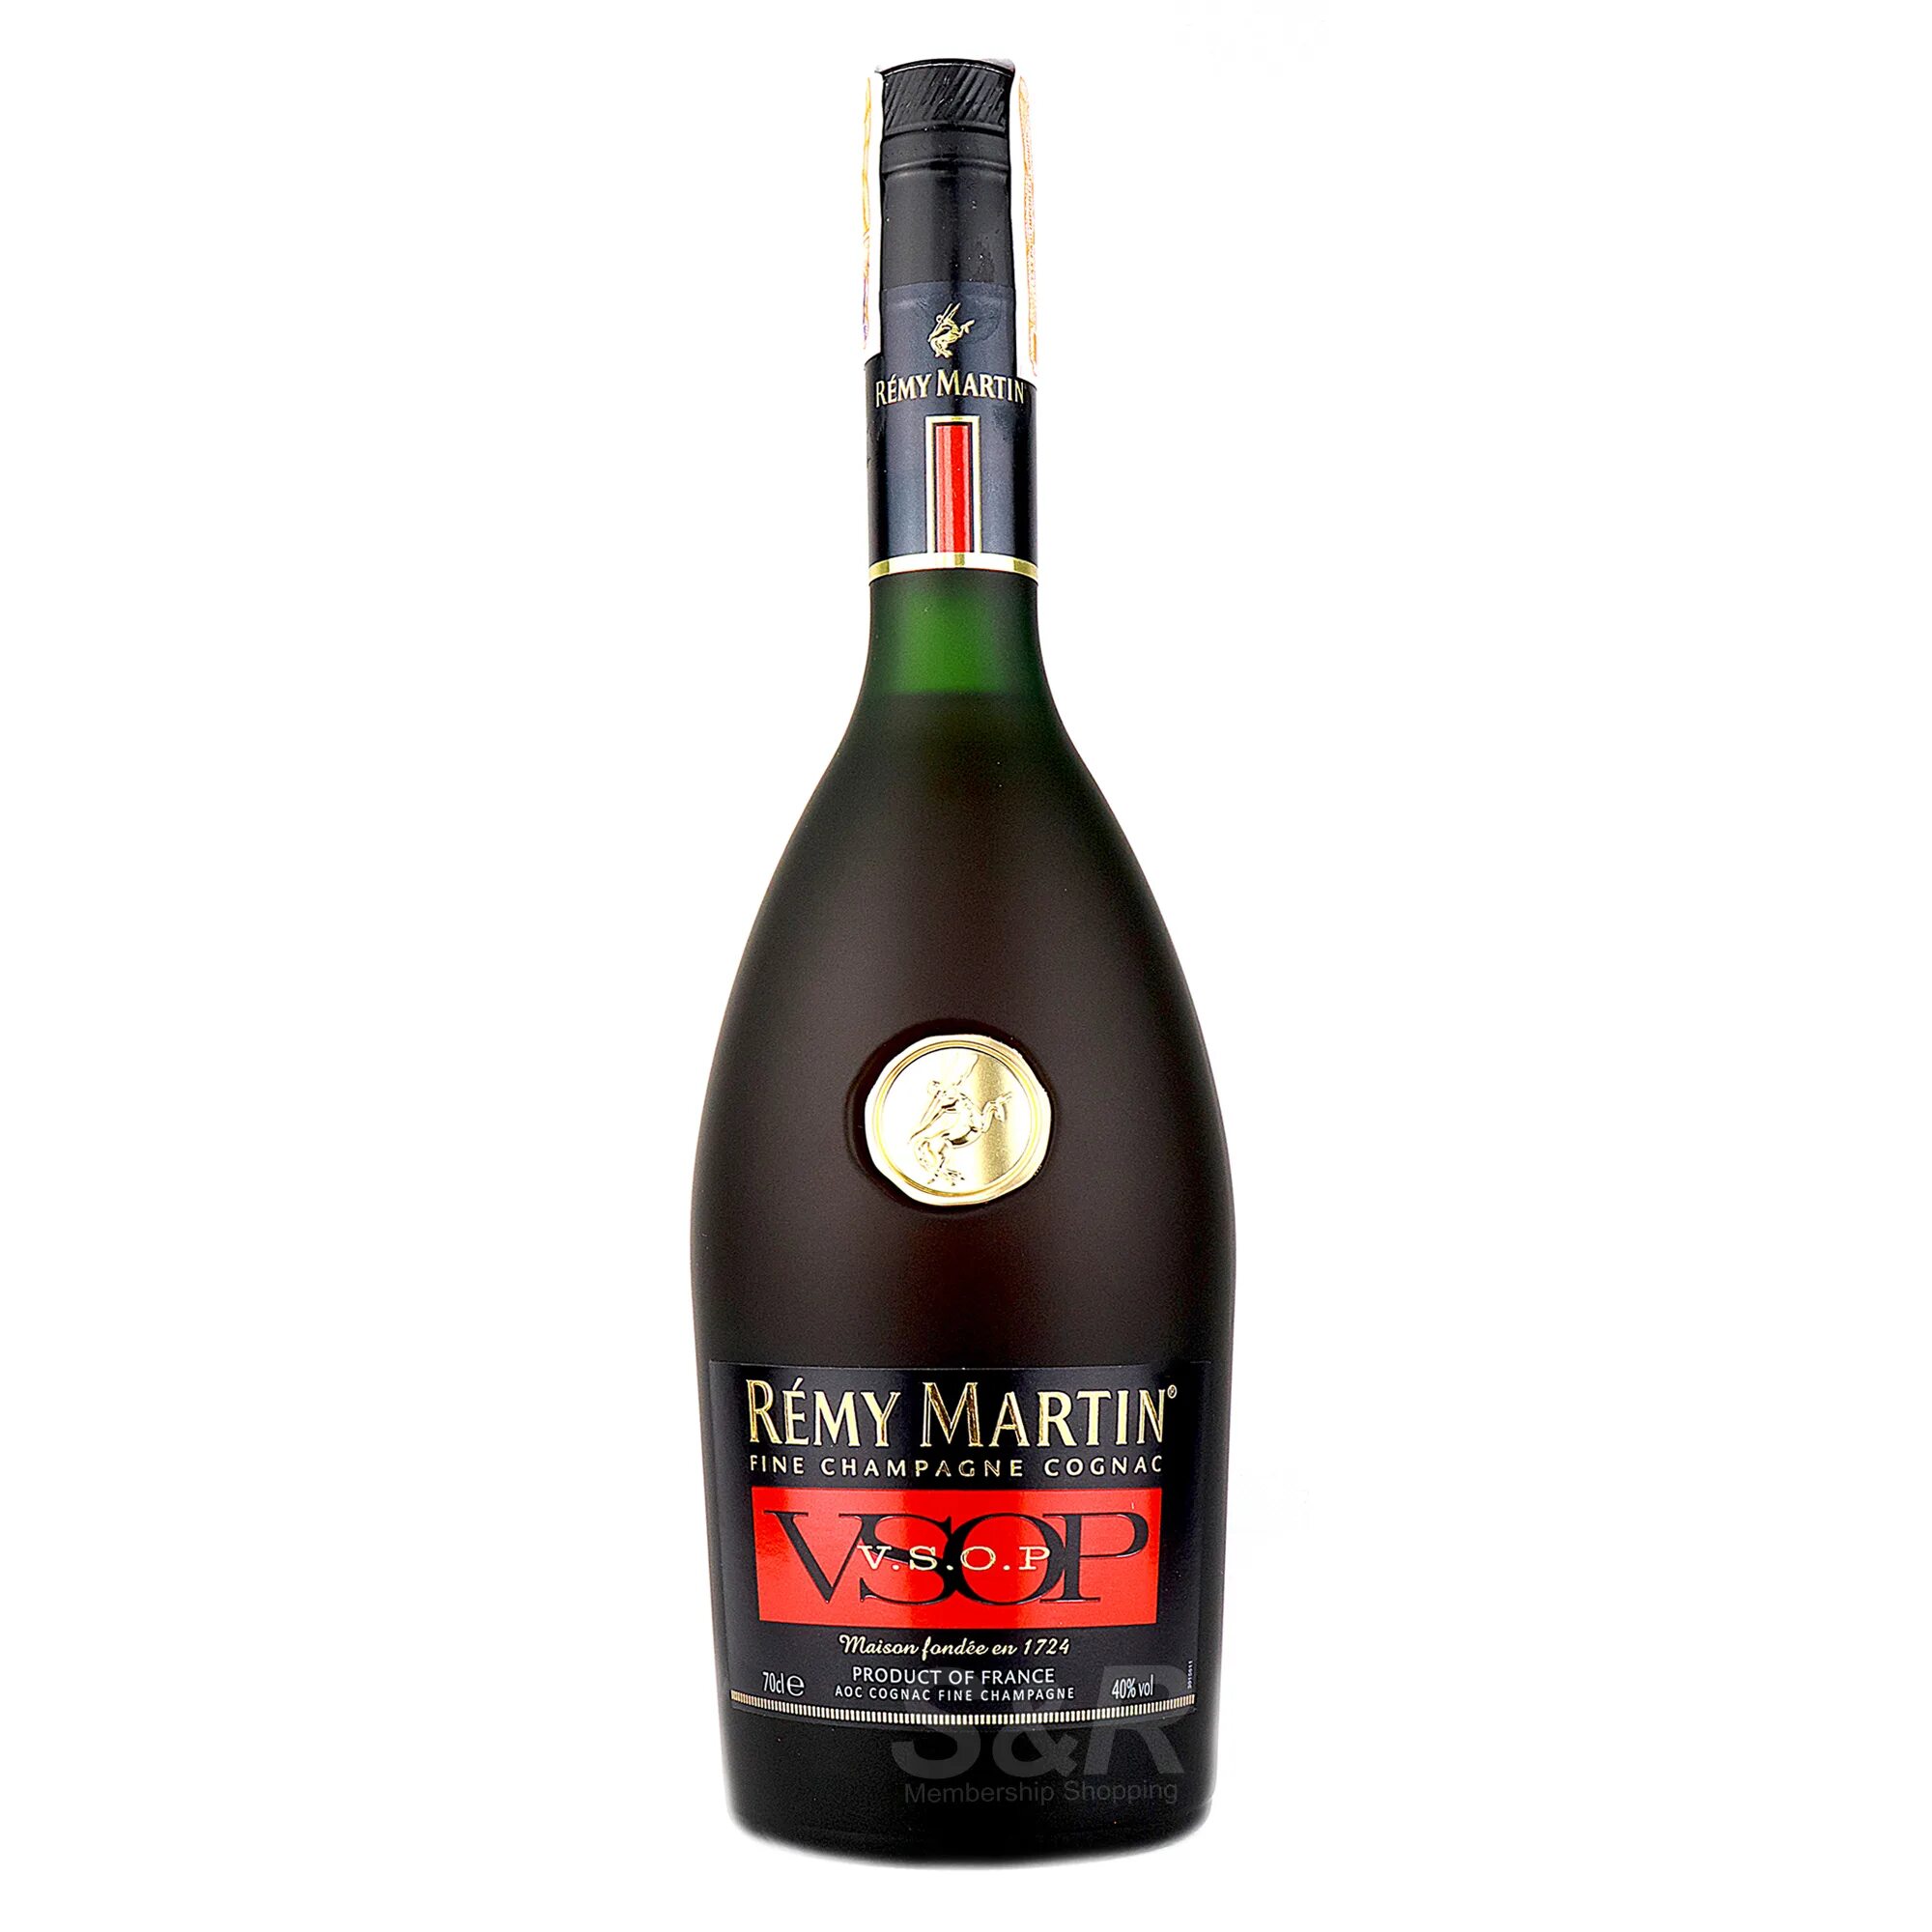 Remy martin champagne. Remy Martin VSOP. Remy Martin VSOP Fine Champagne Cognac 0.5.